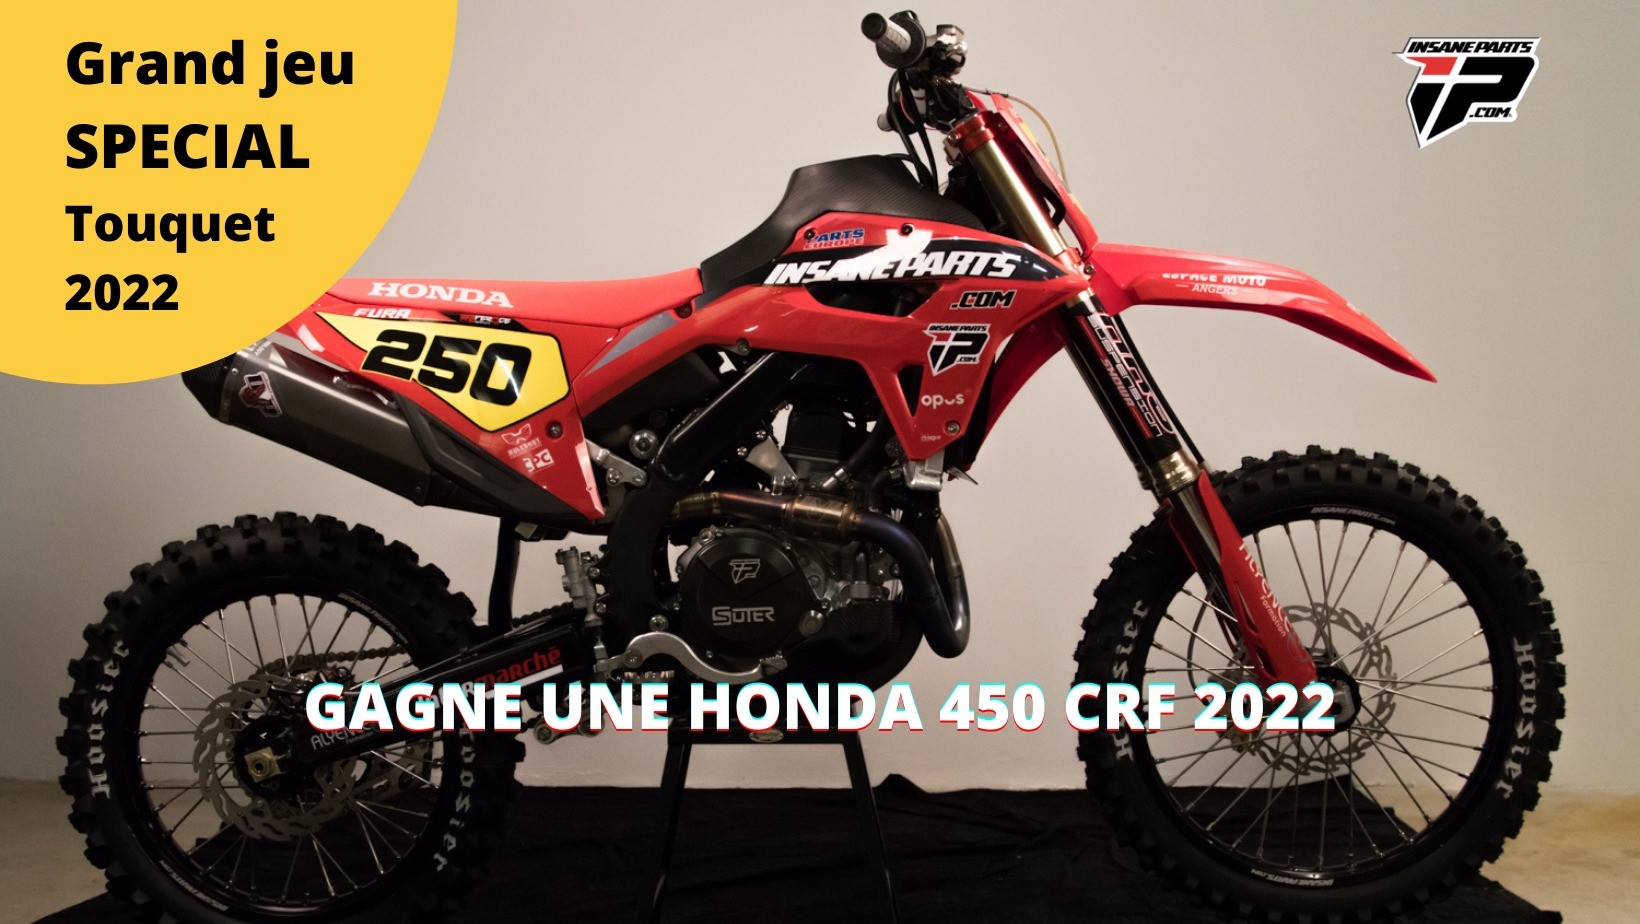 Gagne une Honda 450 CRF 2022